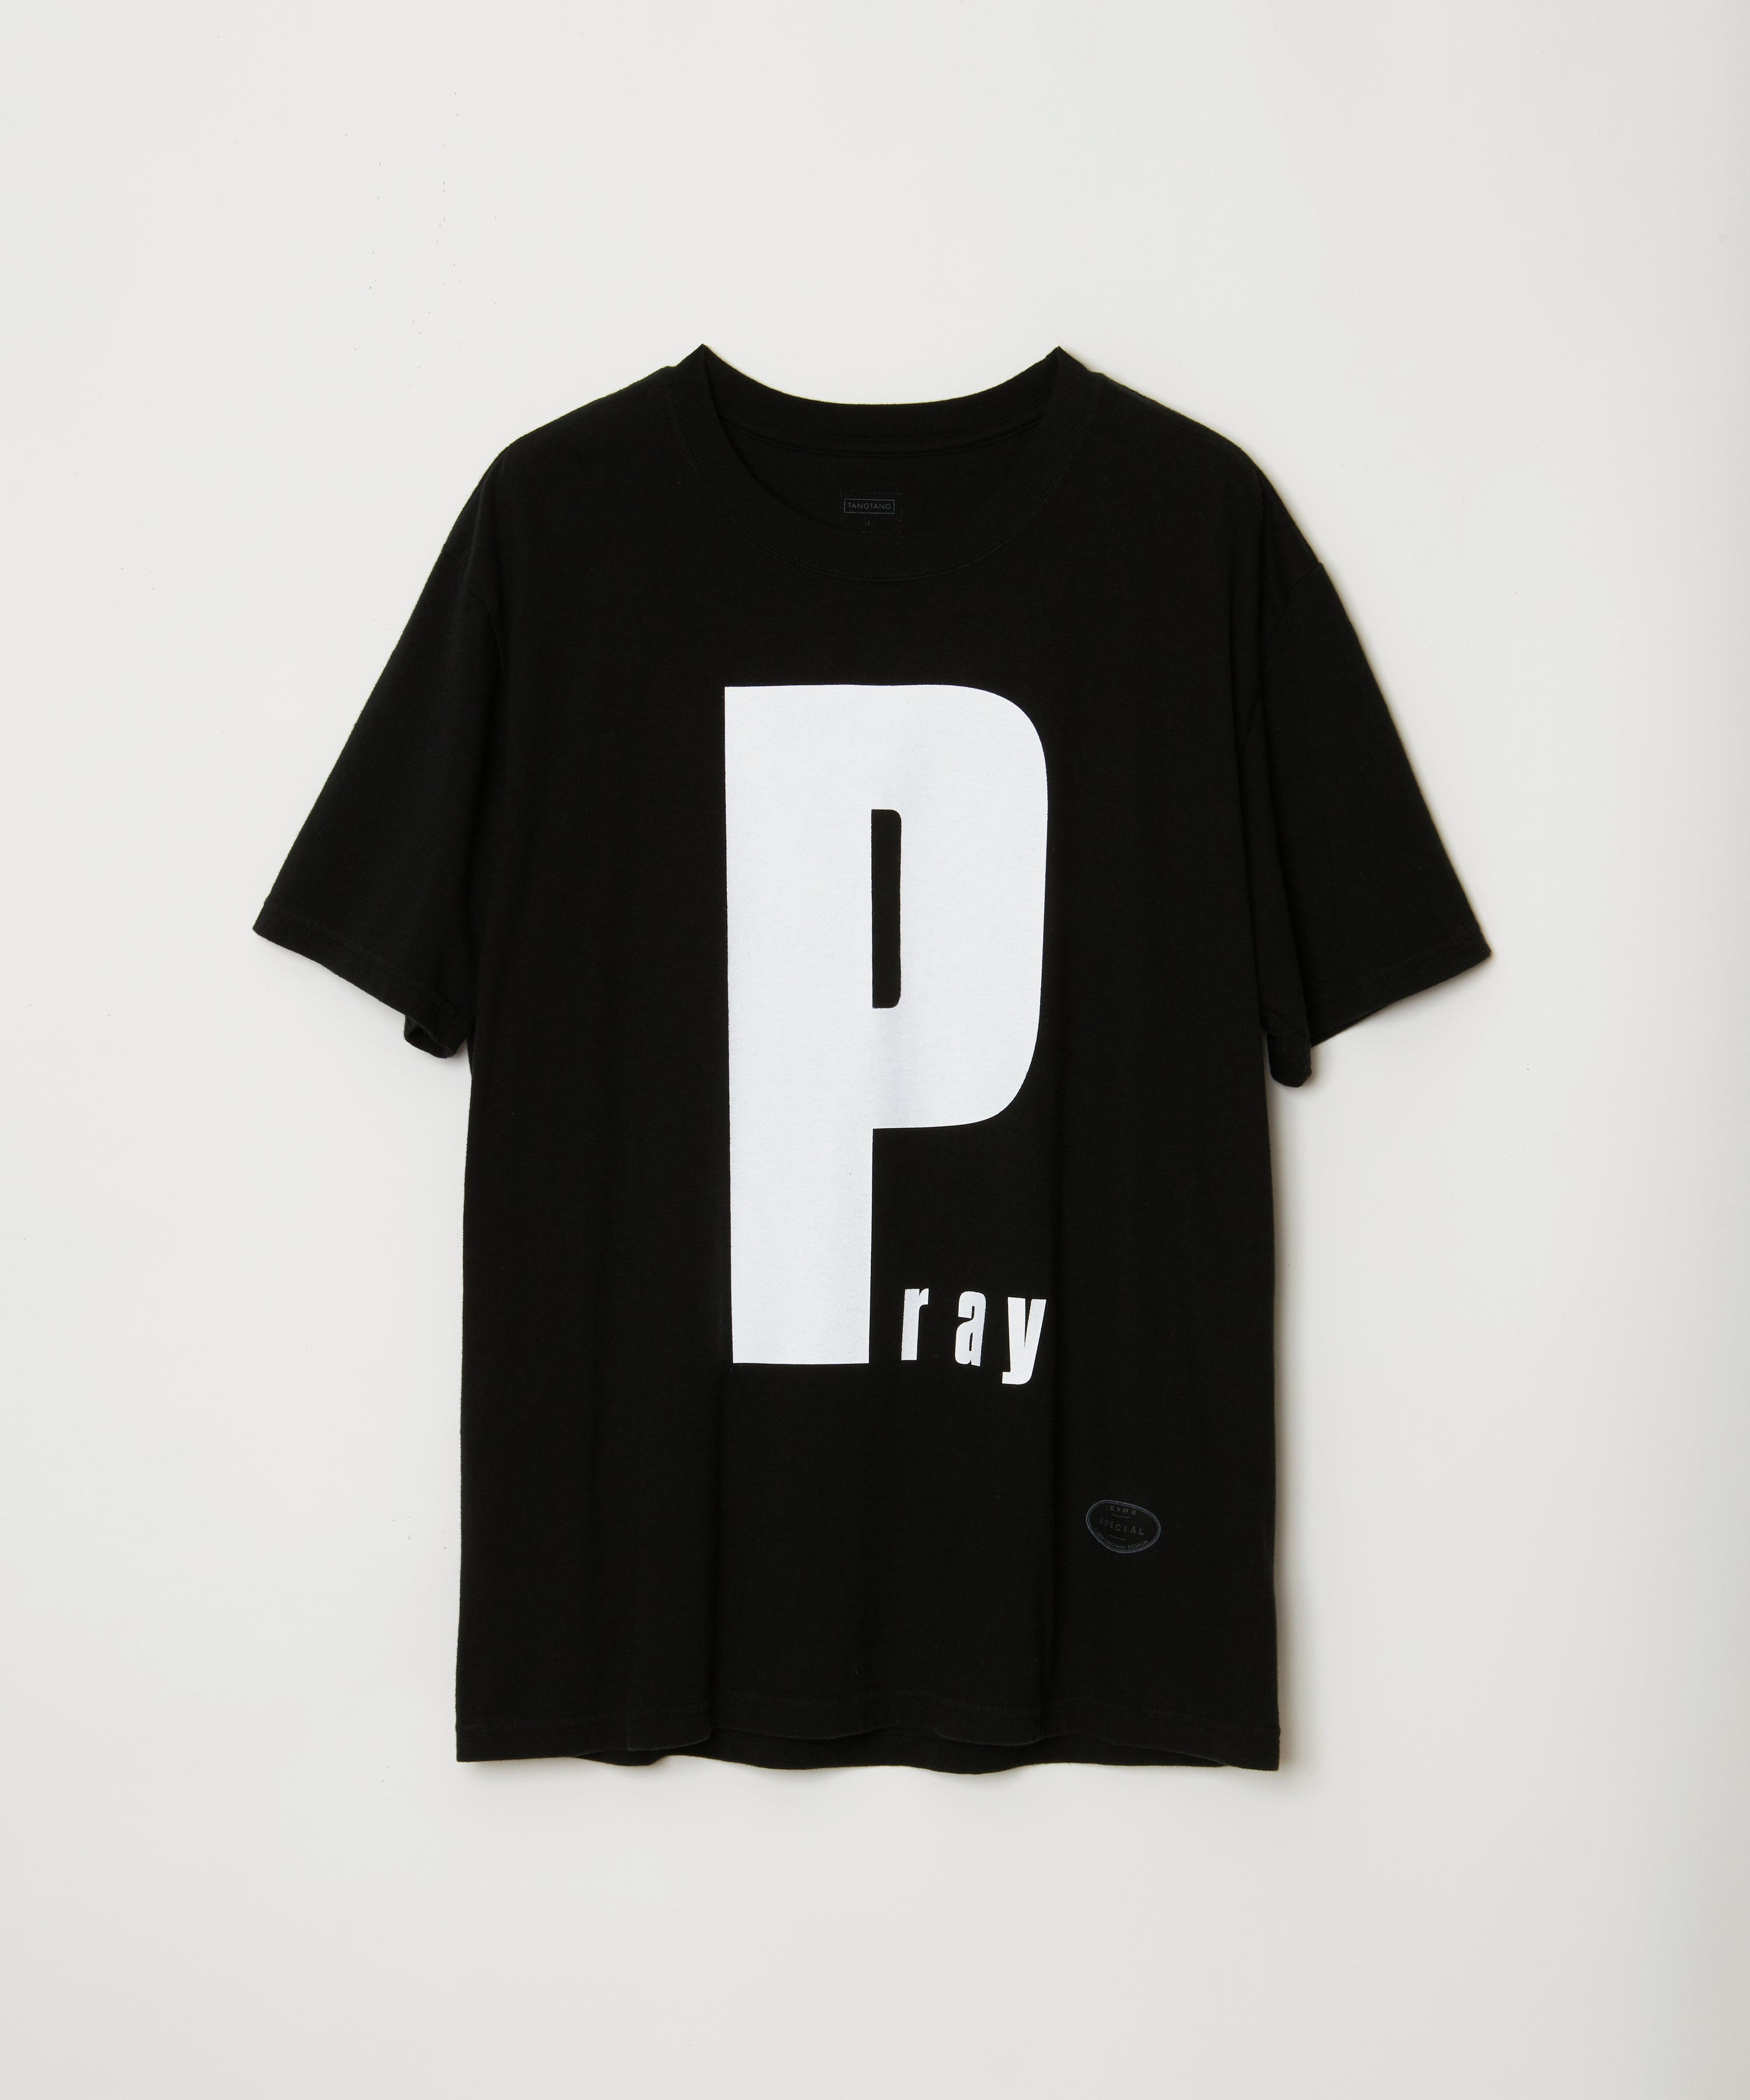 PRAY T-shirt 02 (Black)